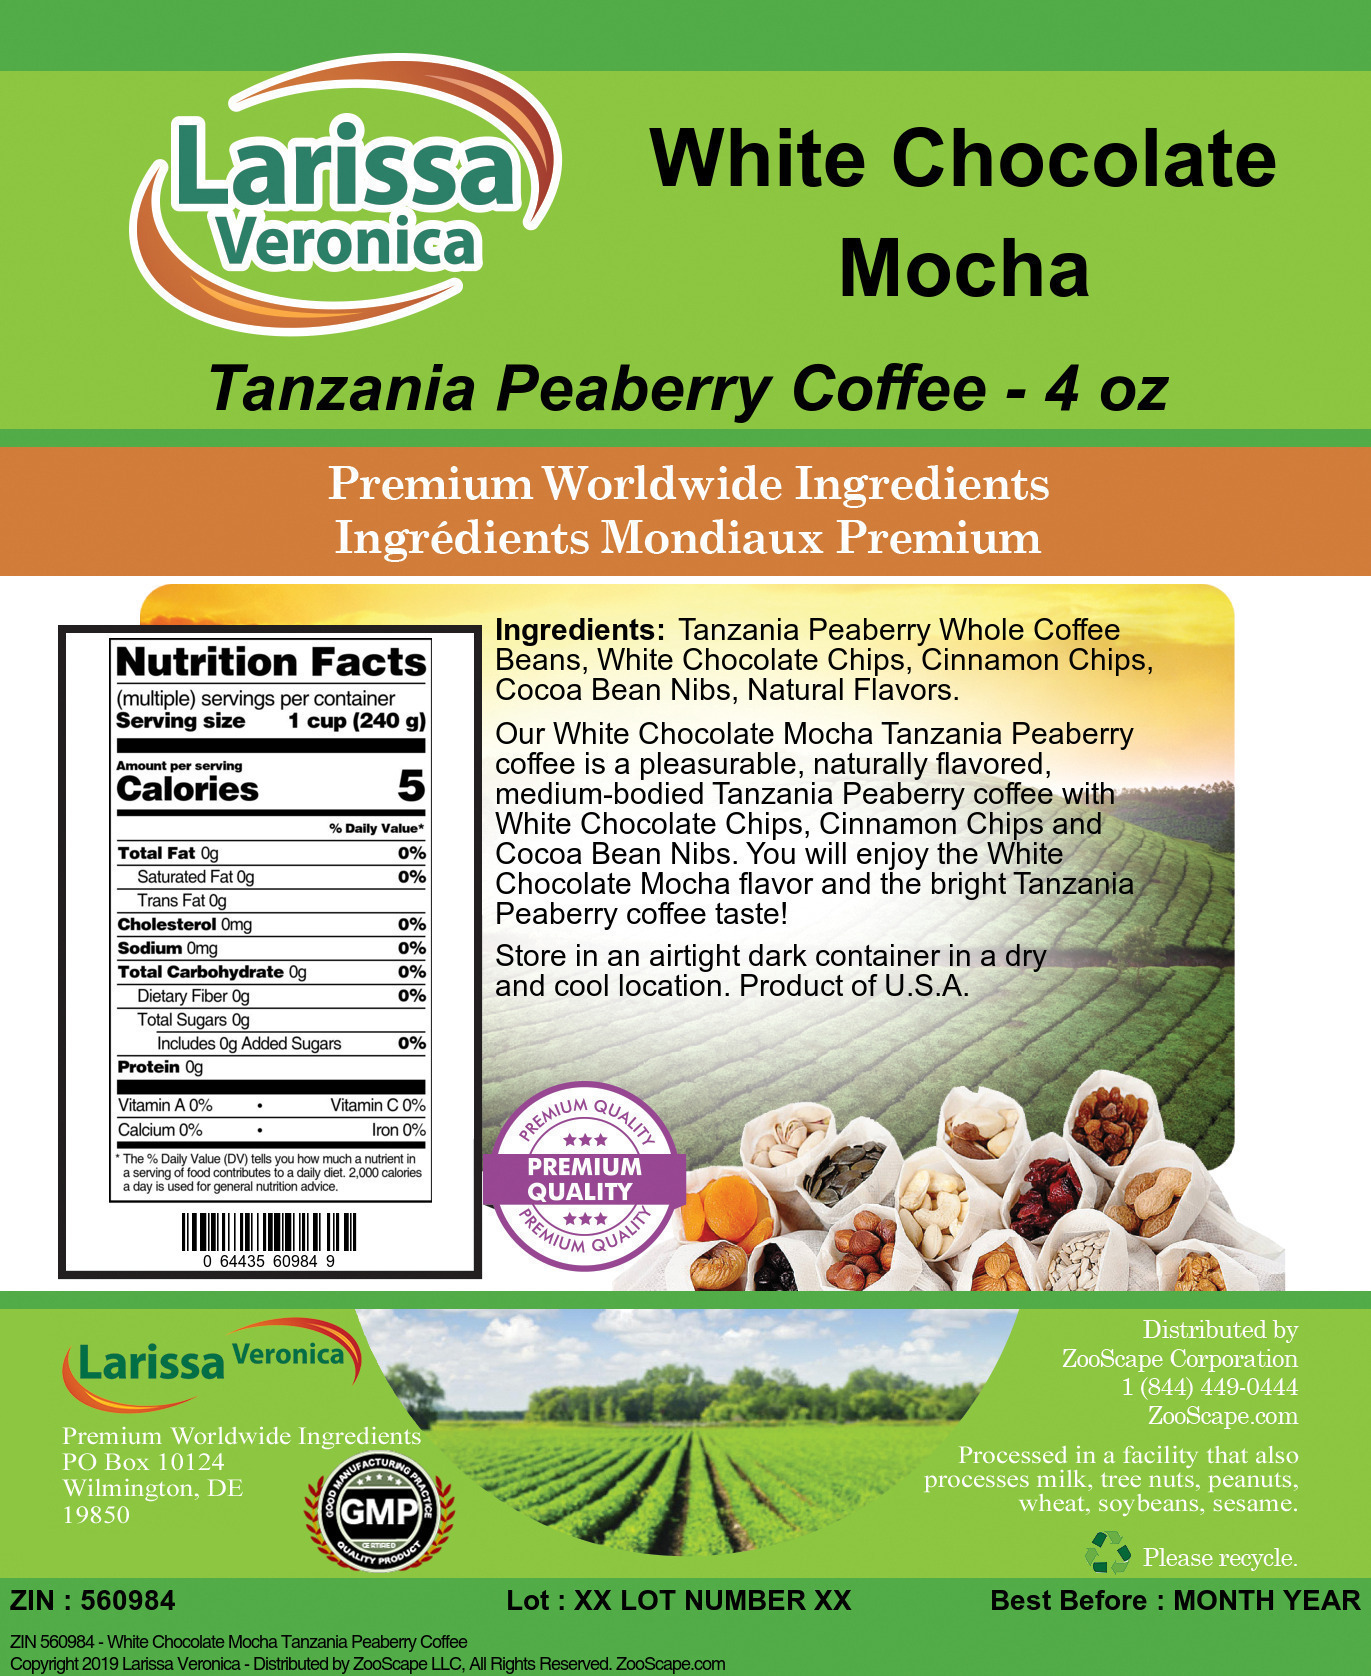 White Chocolate Mocha Tanzania Peaberry Coffee - Label